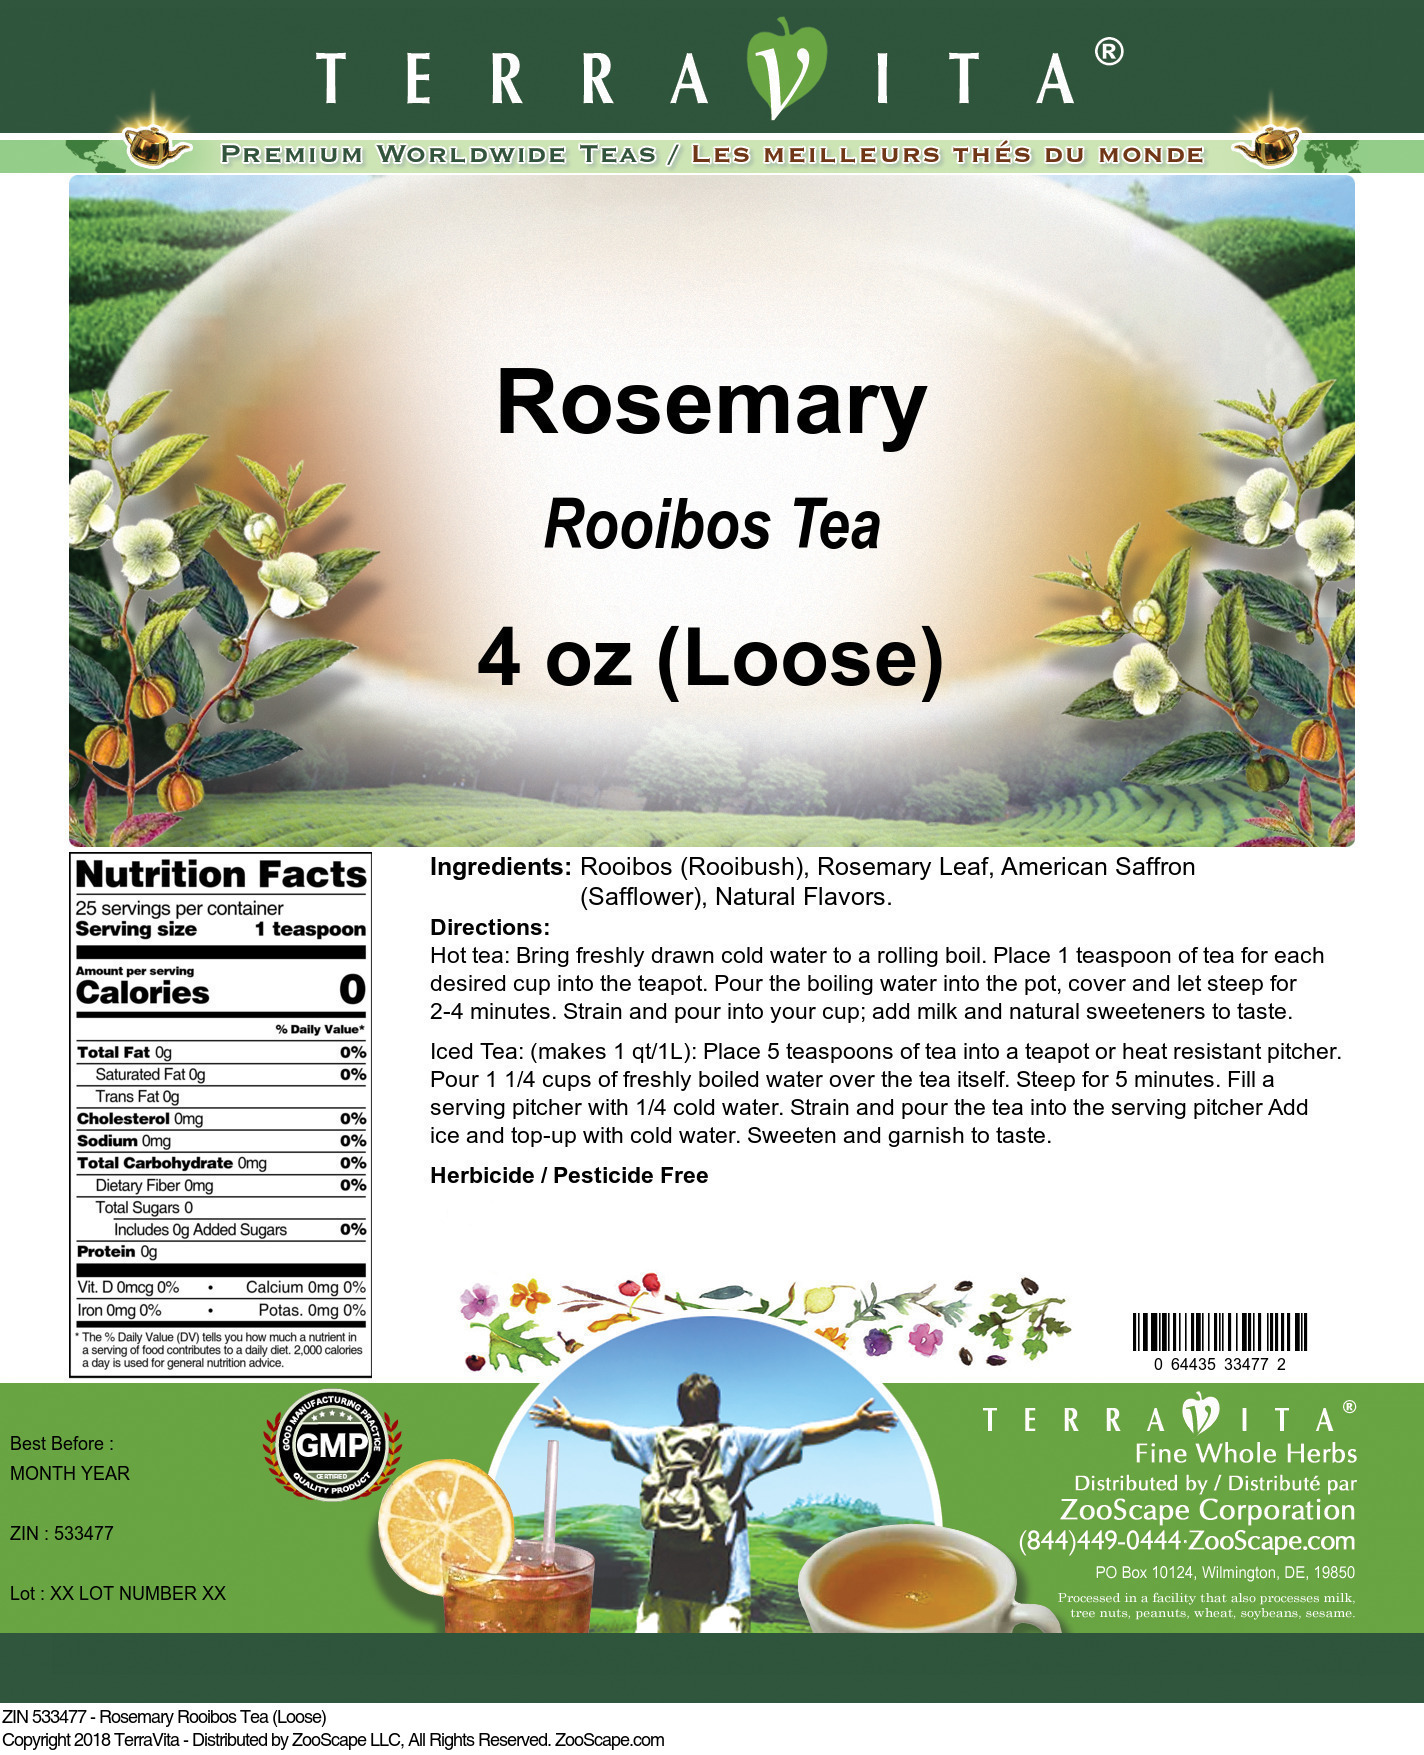 Rosemary Rooibos Tea (Loose) - Label